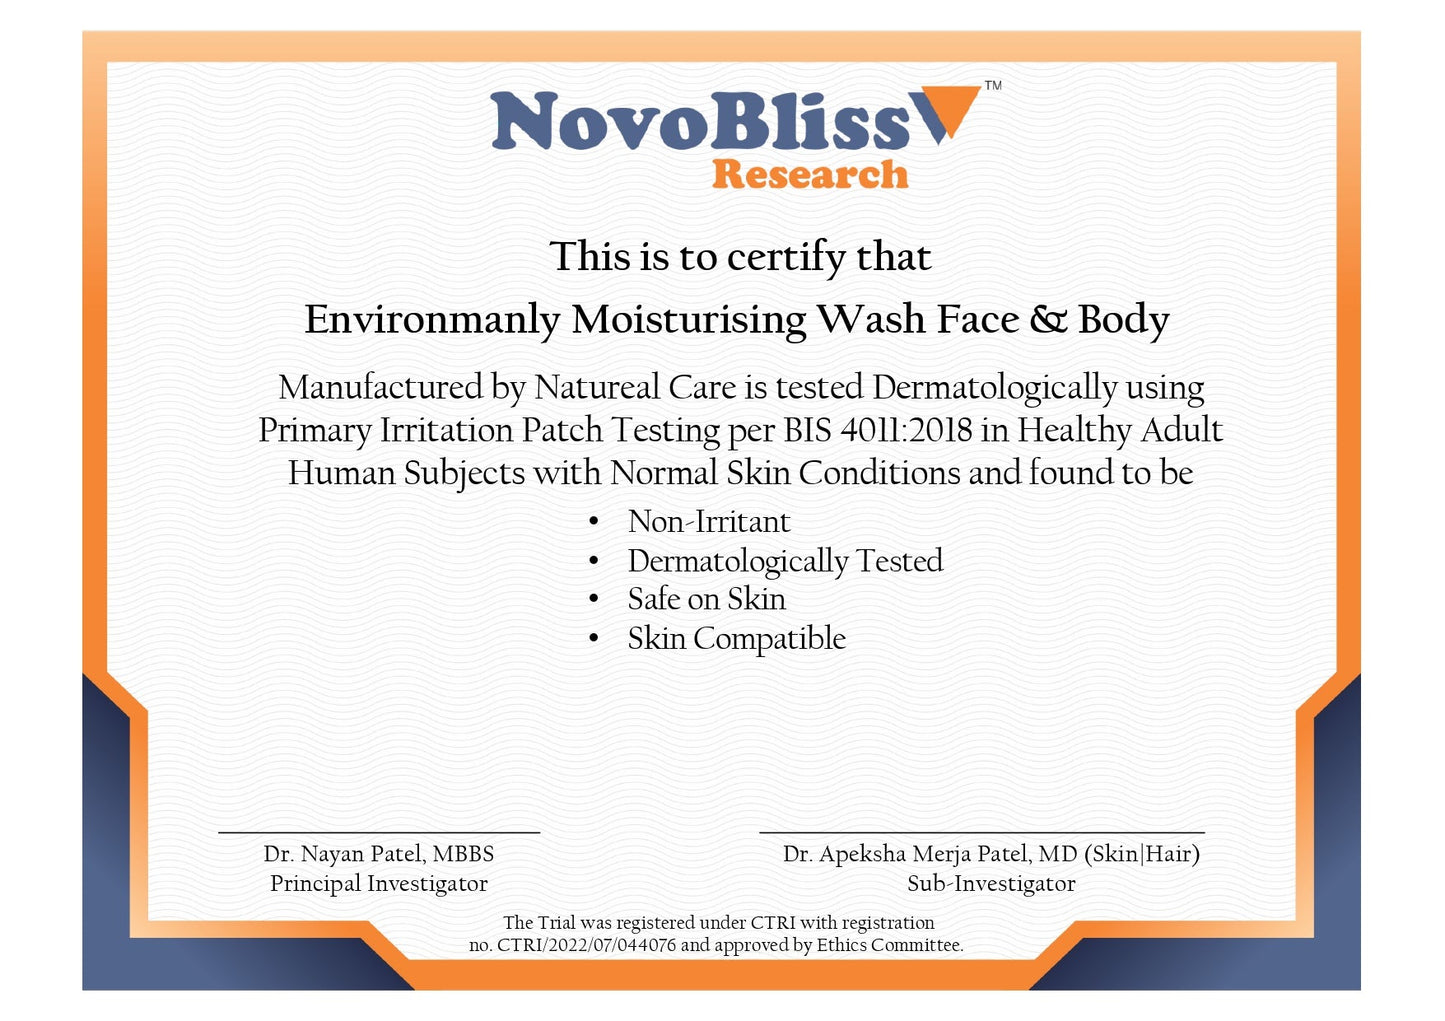 Face & Body Moisturising Wash - Environmanly